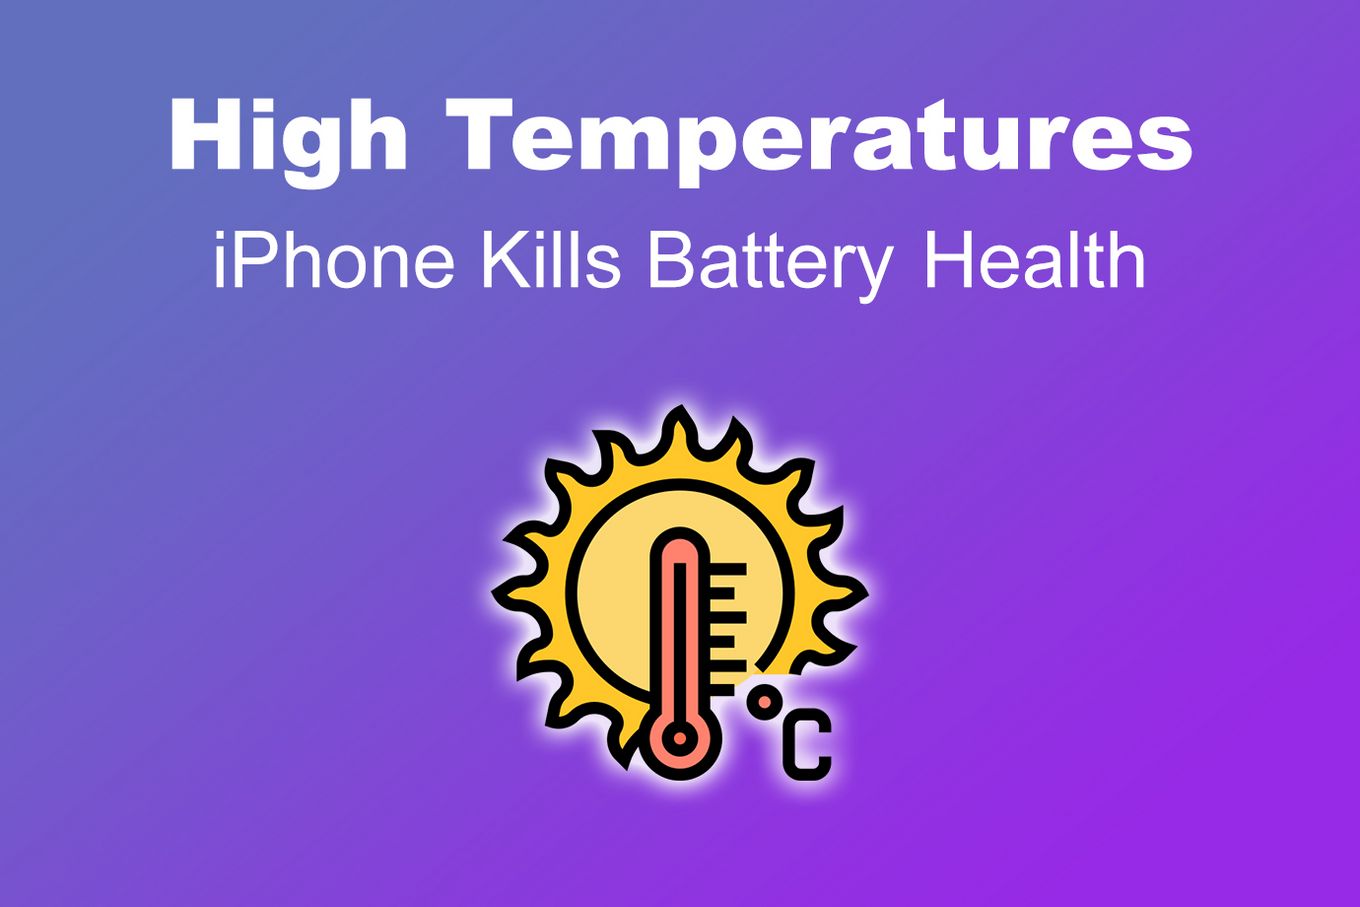 High Temperatures Kills iPhone Battery Health